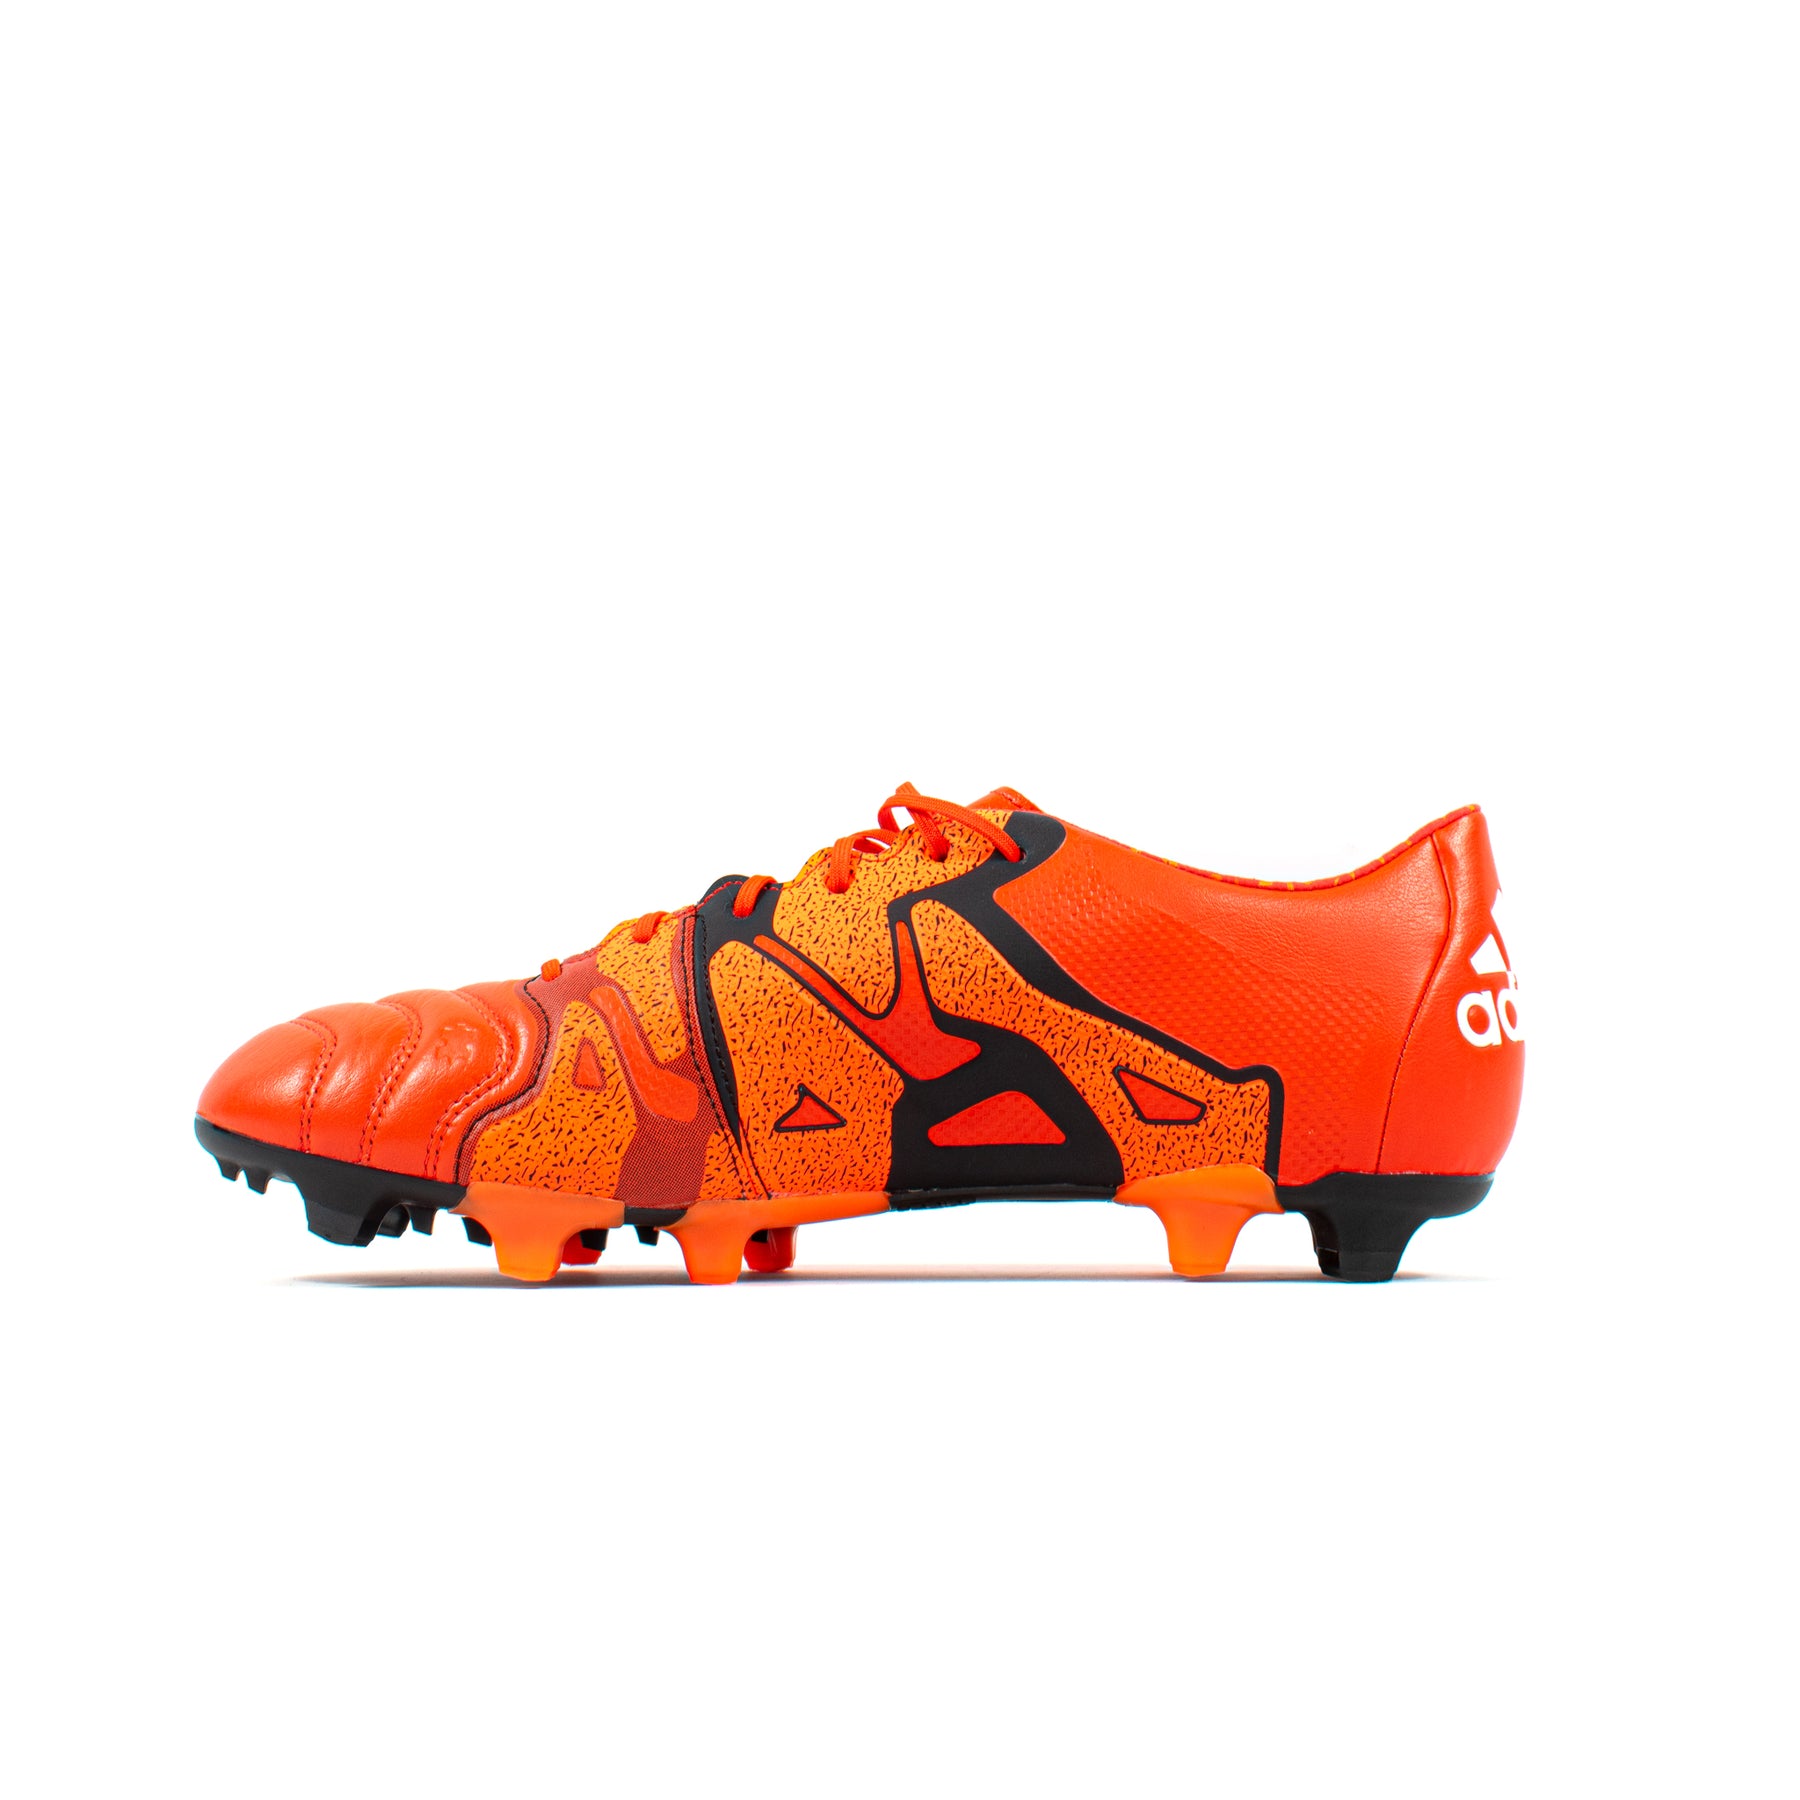 Adidas X 15.1 Orange Leather FG – Classic Soccer Cleats